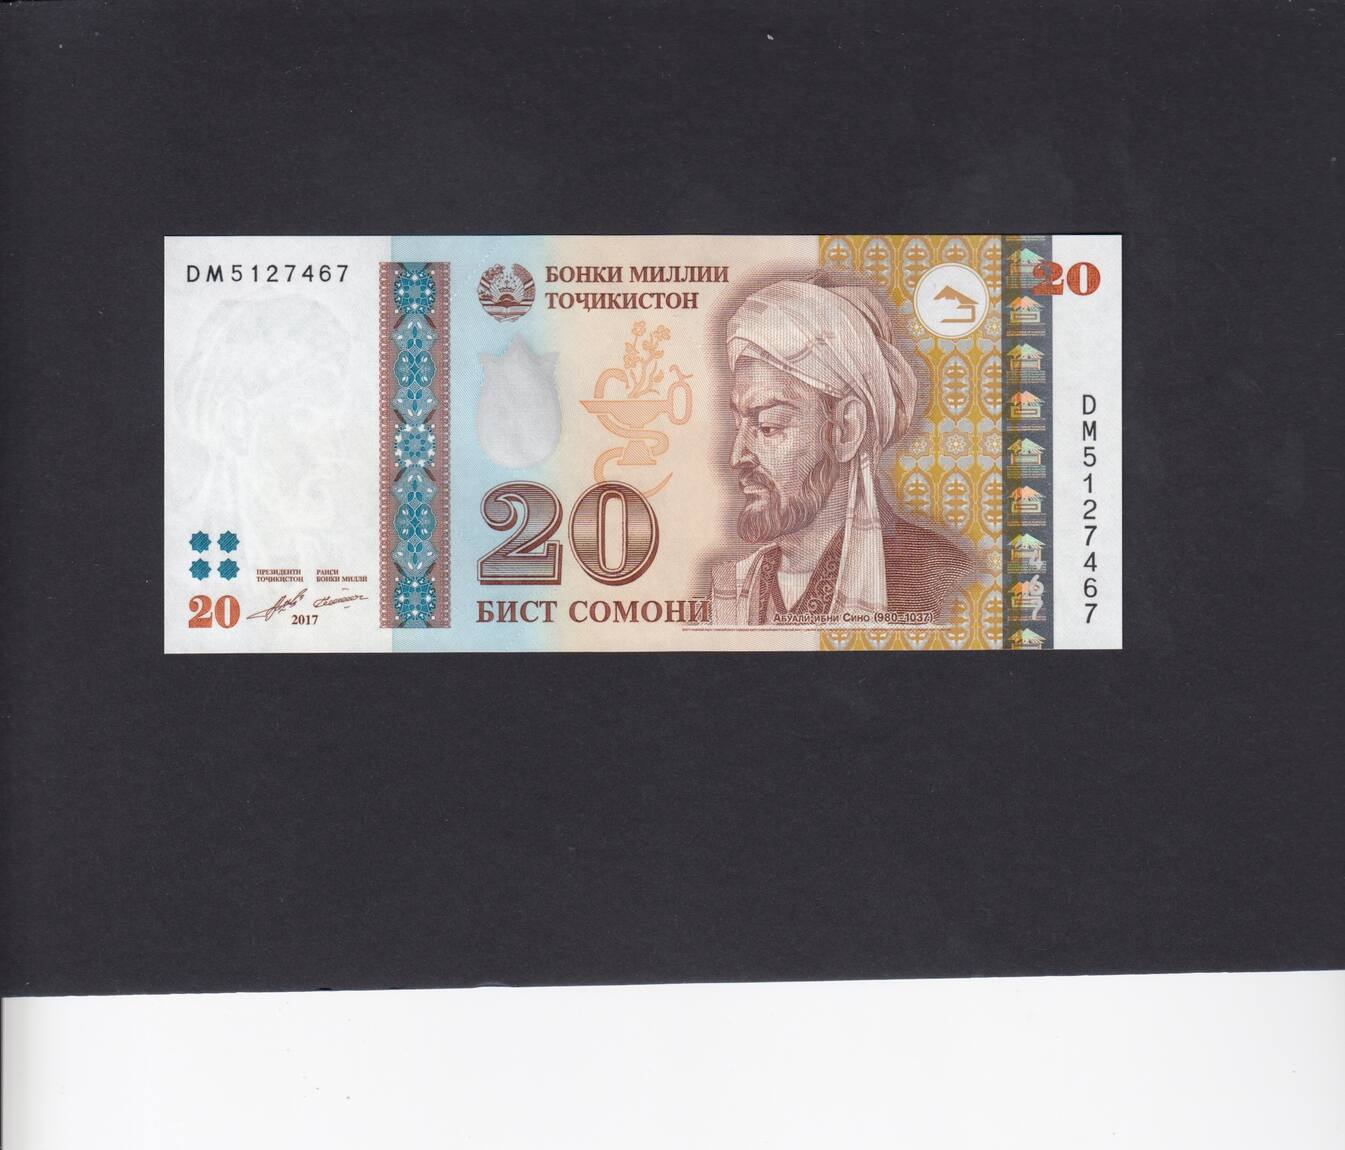 Tajikistan Paper Money 5 Somoni 1999 2013 UNC